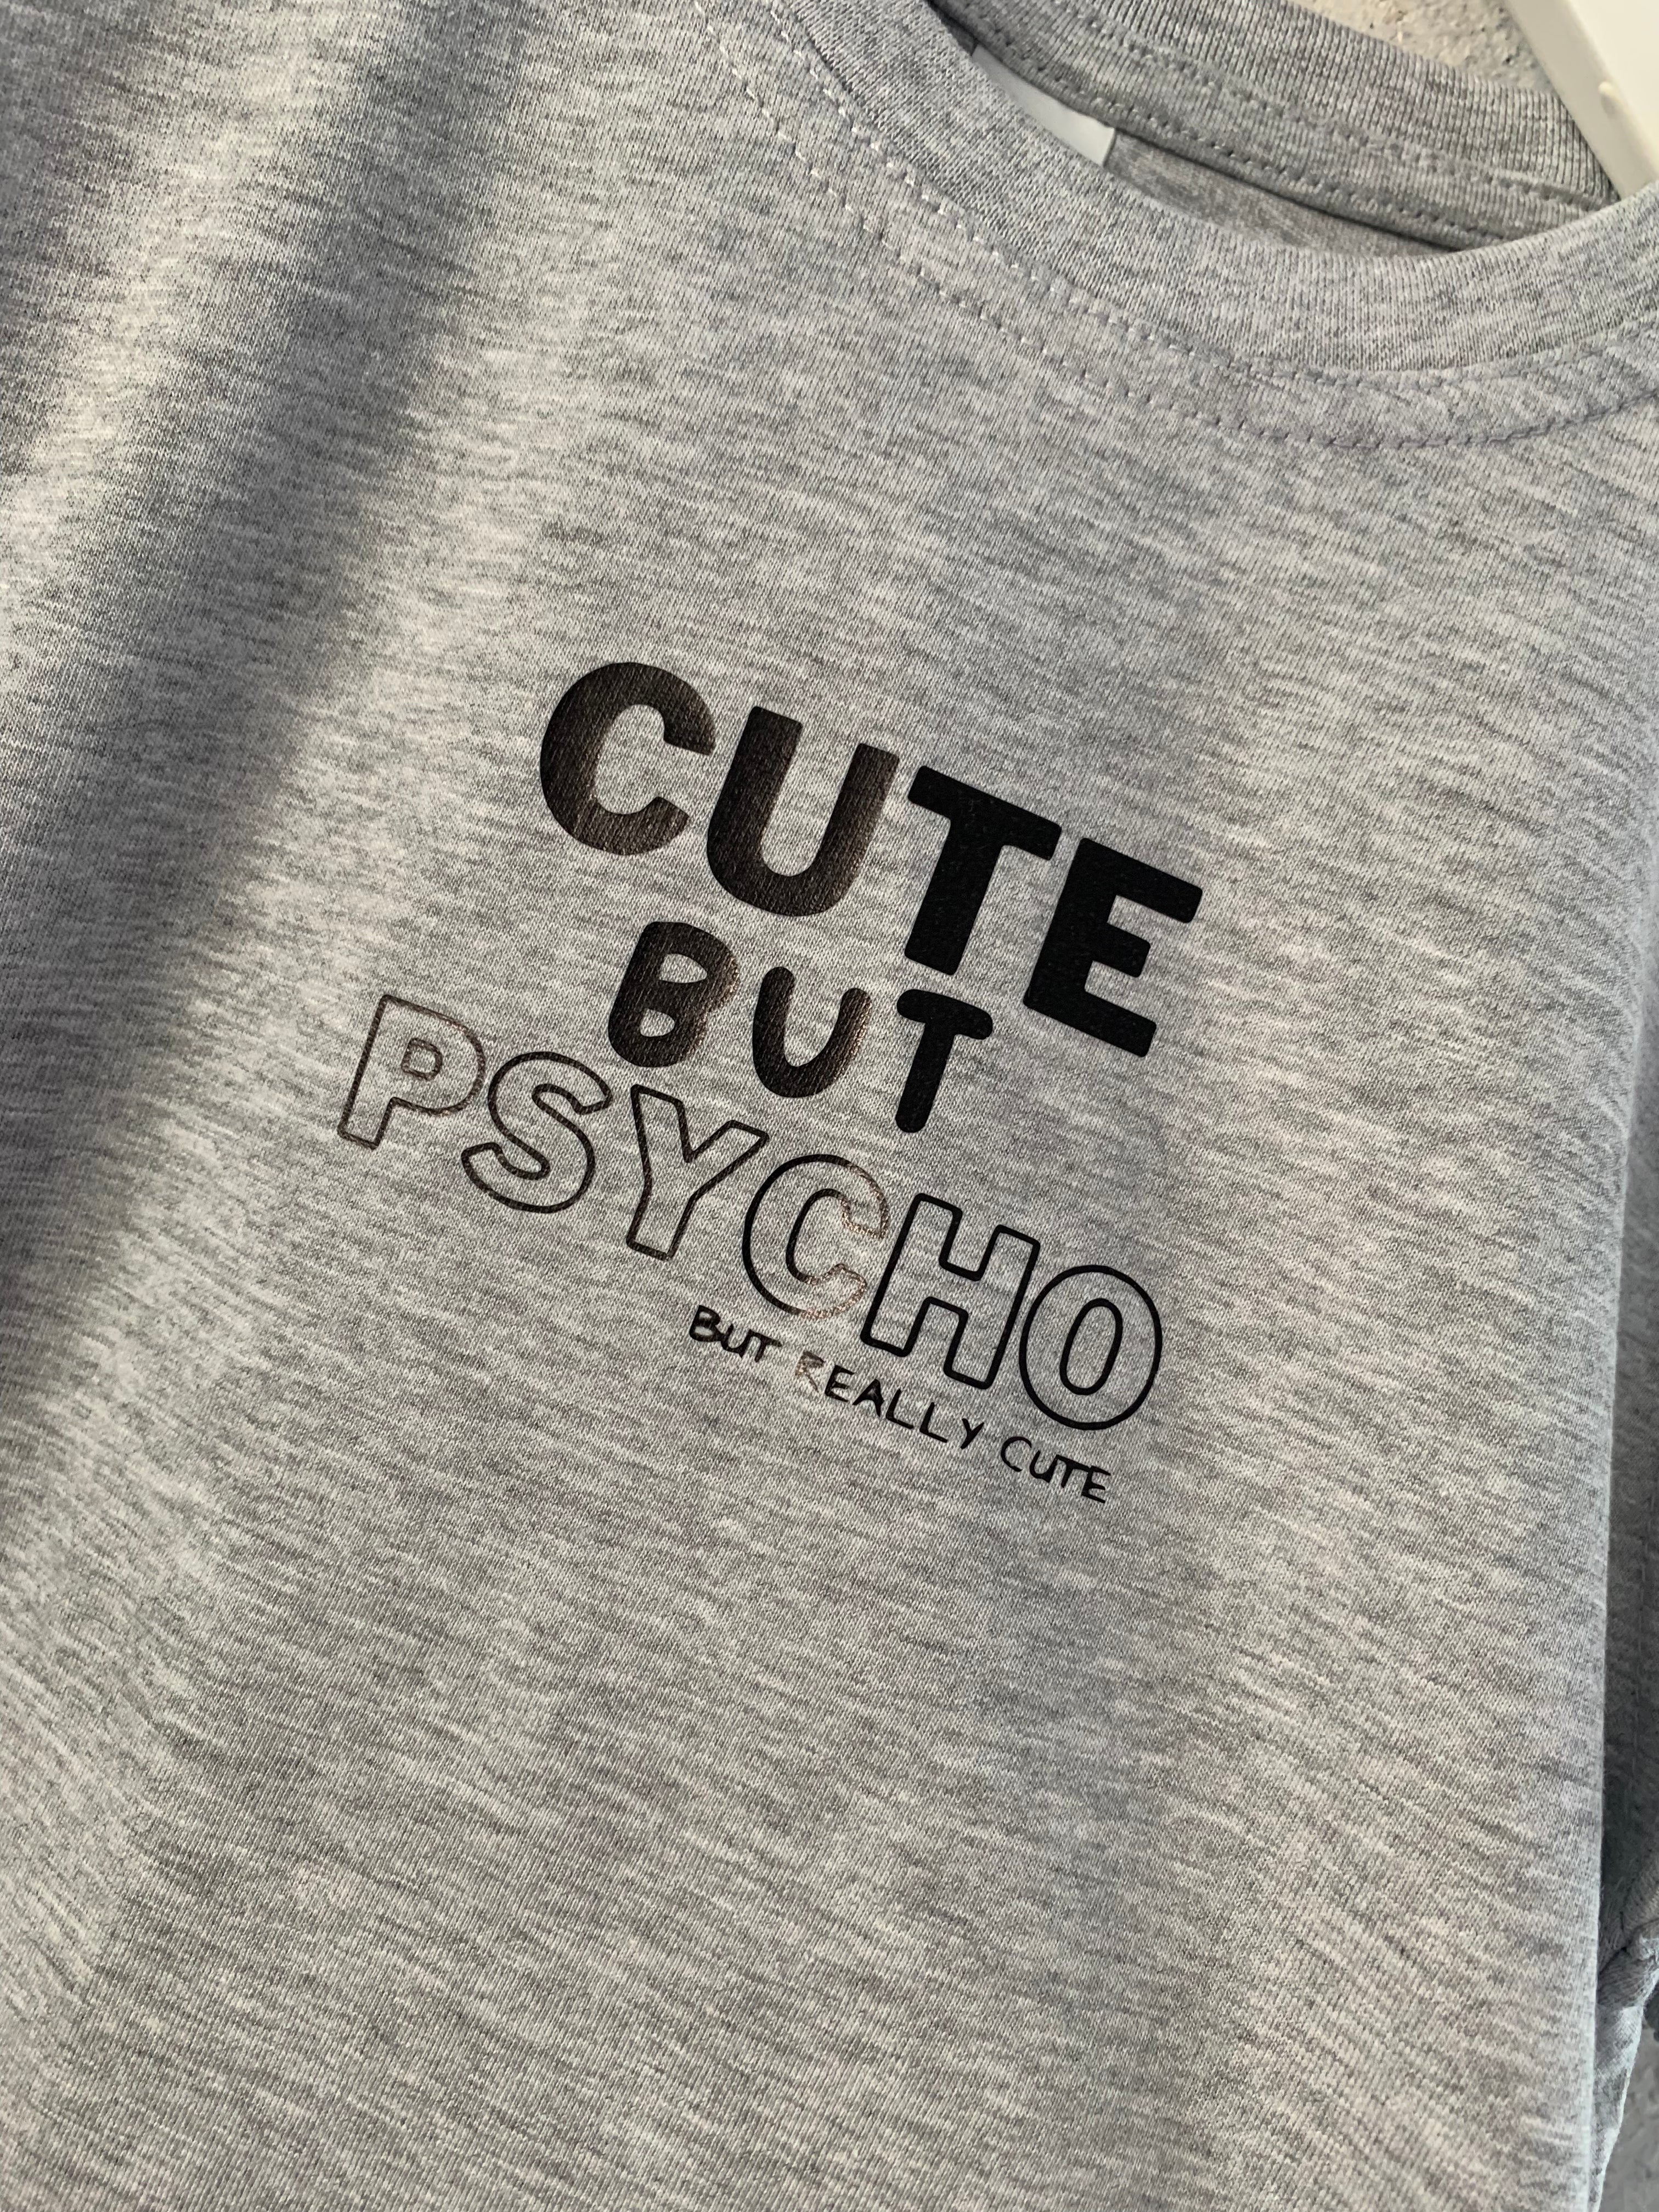 Cute but Psycho tshirt - FIVE&KNUX